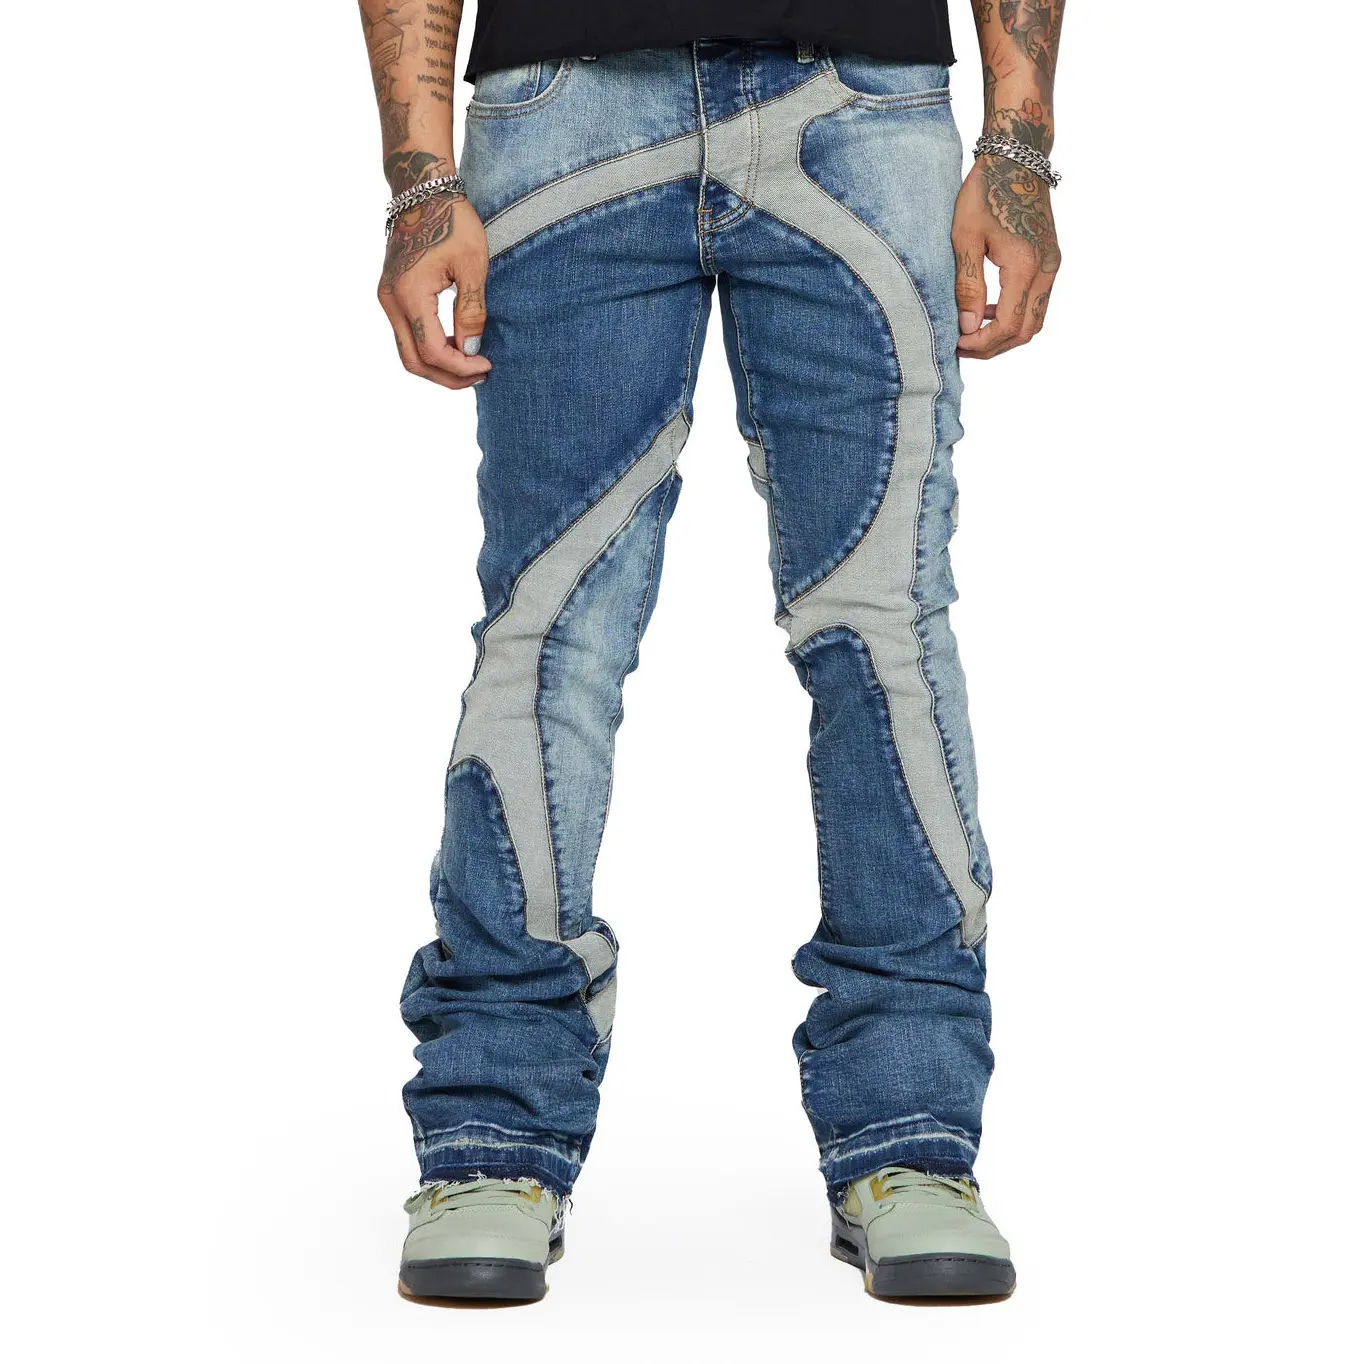 AeeDenim Diseñadores personalizados Logo Hombres Pantalones Jeans Hombres apilados patchwork bordes crudos Azul claro oscuro Lavado Flare fit Denim Jeans